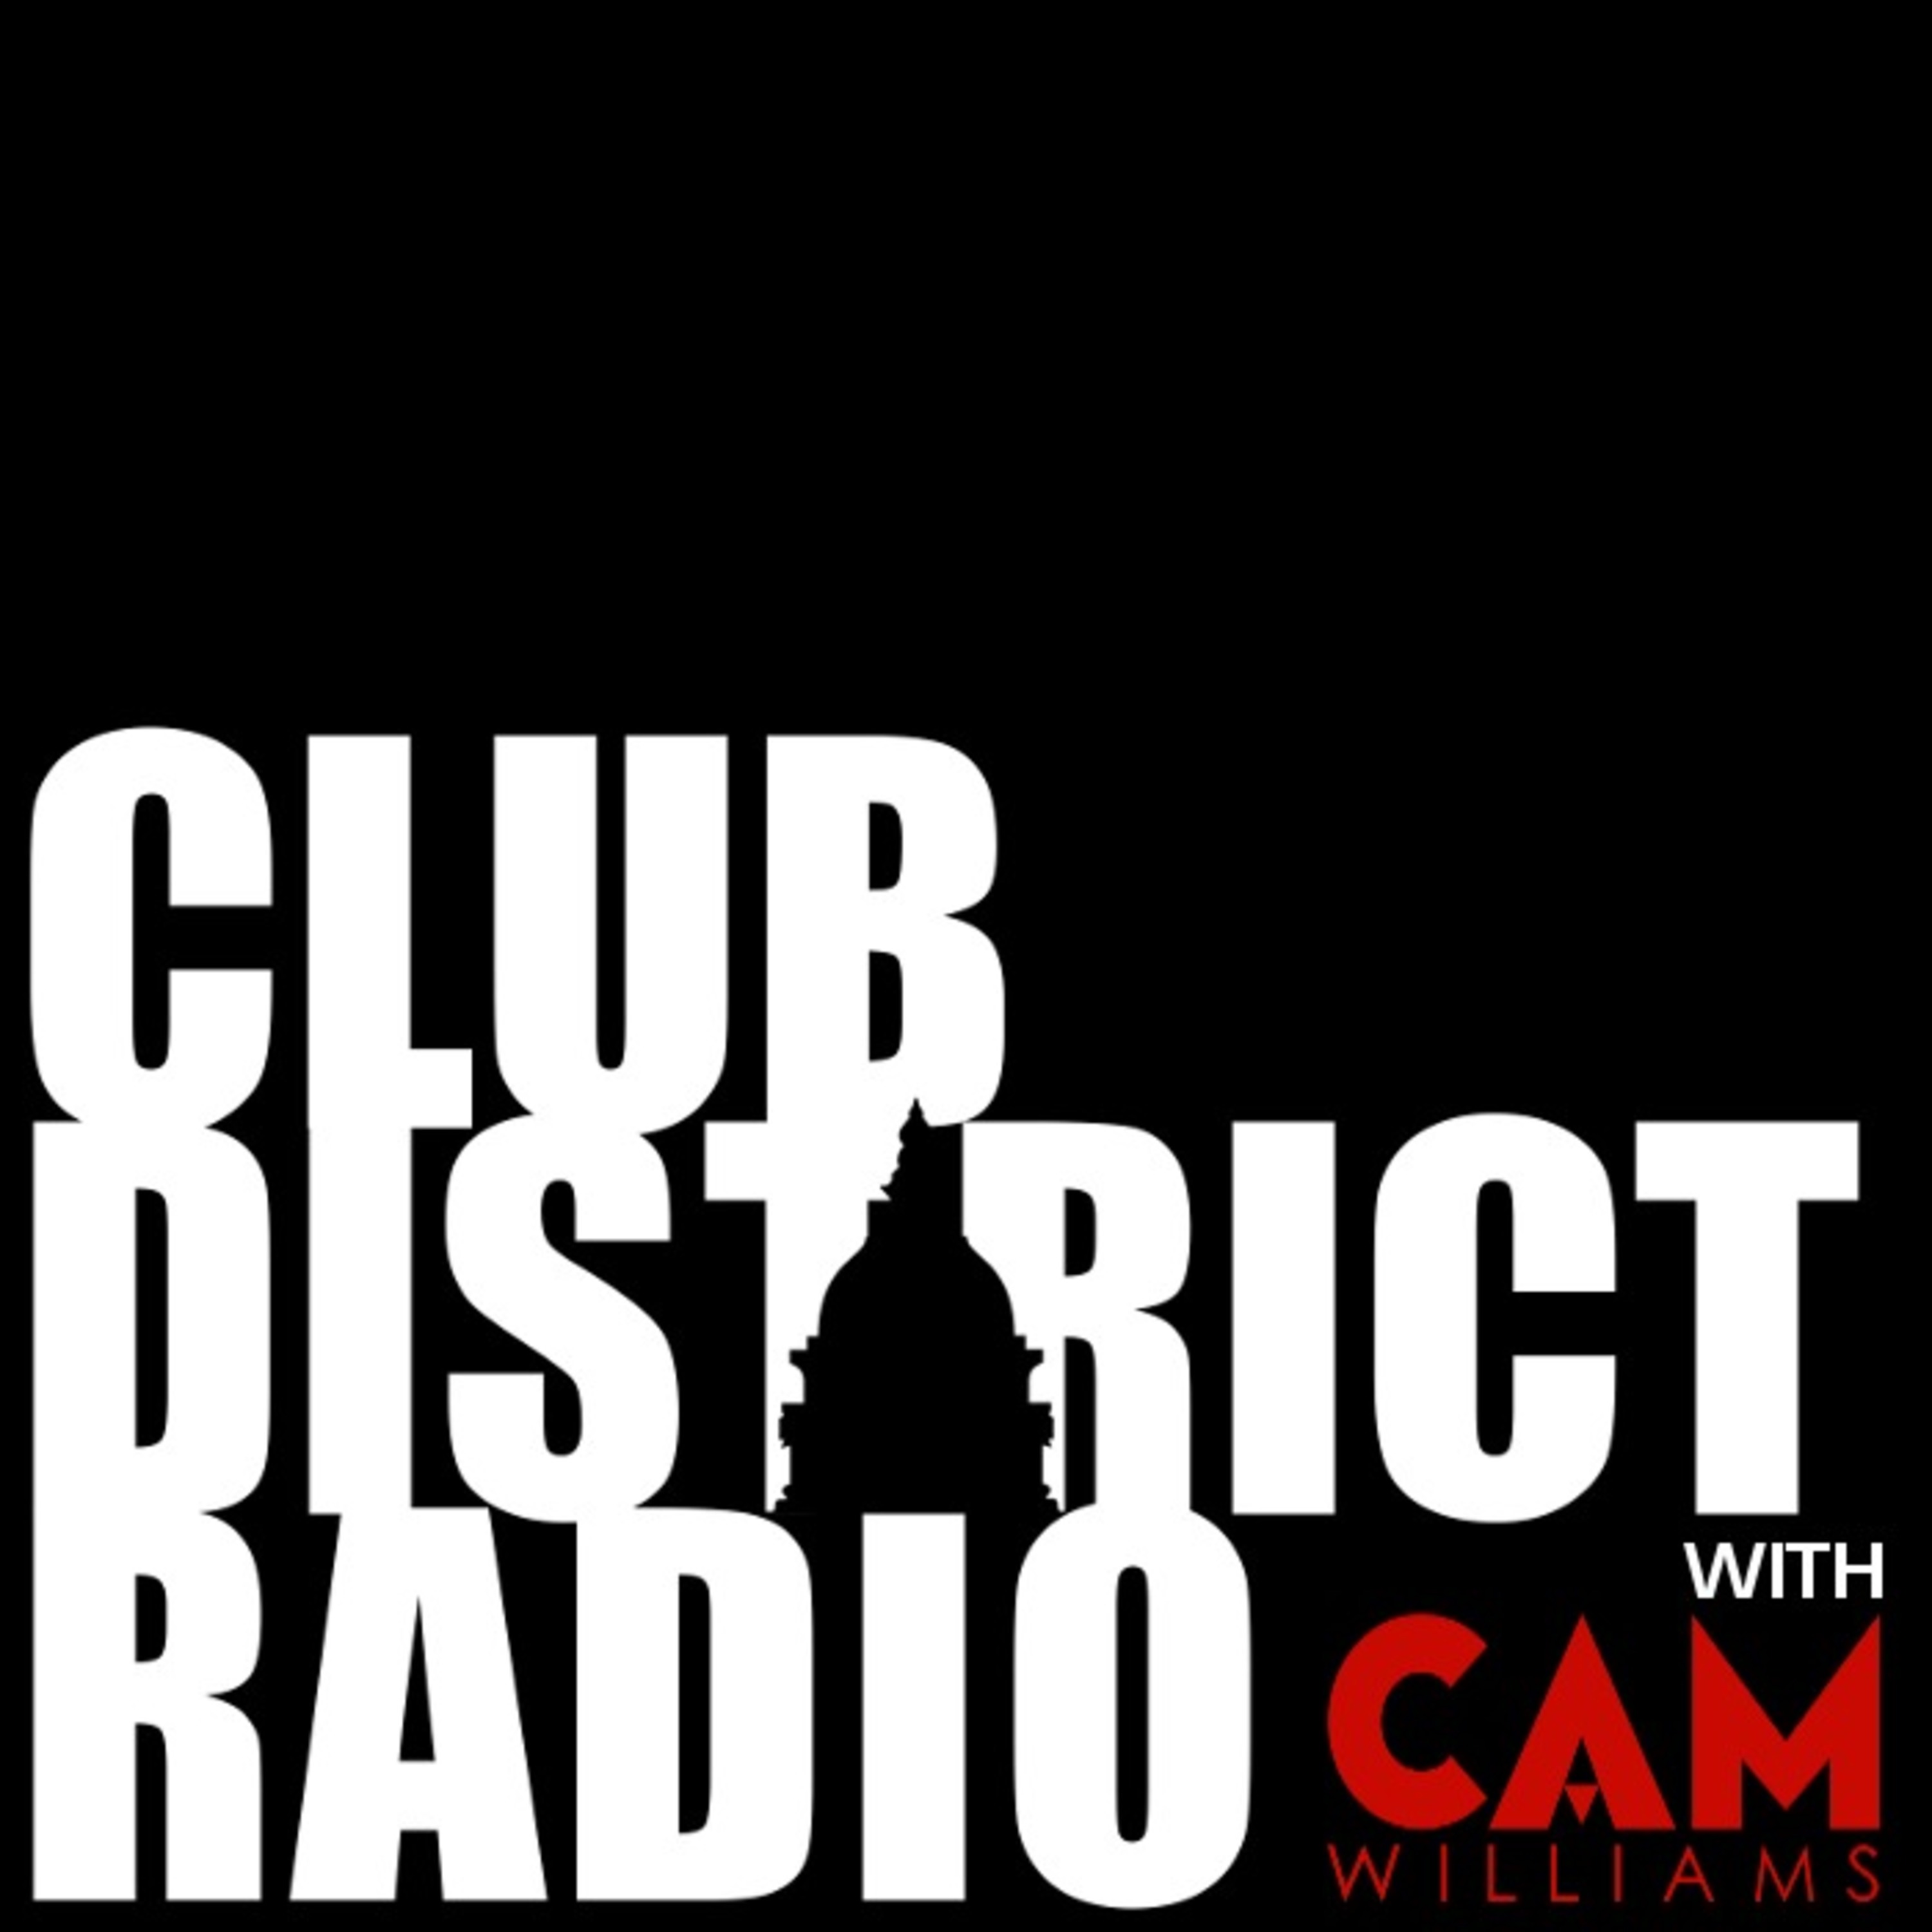 Club District Radio with Cam Williams